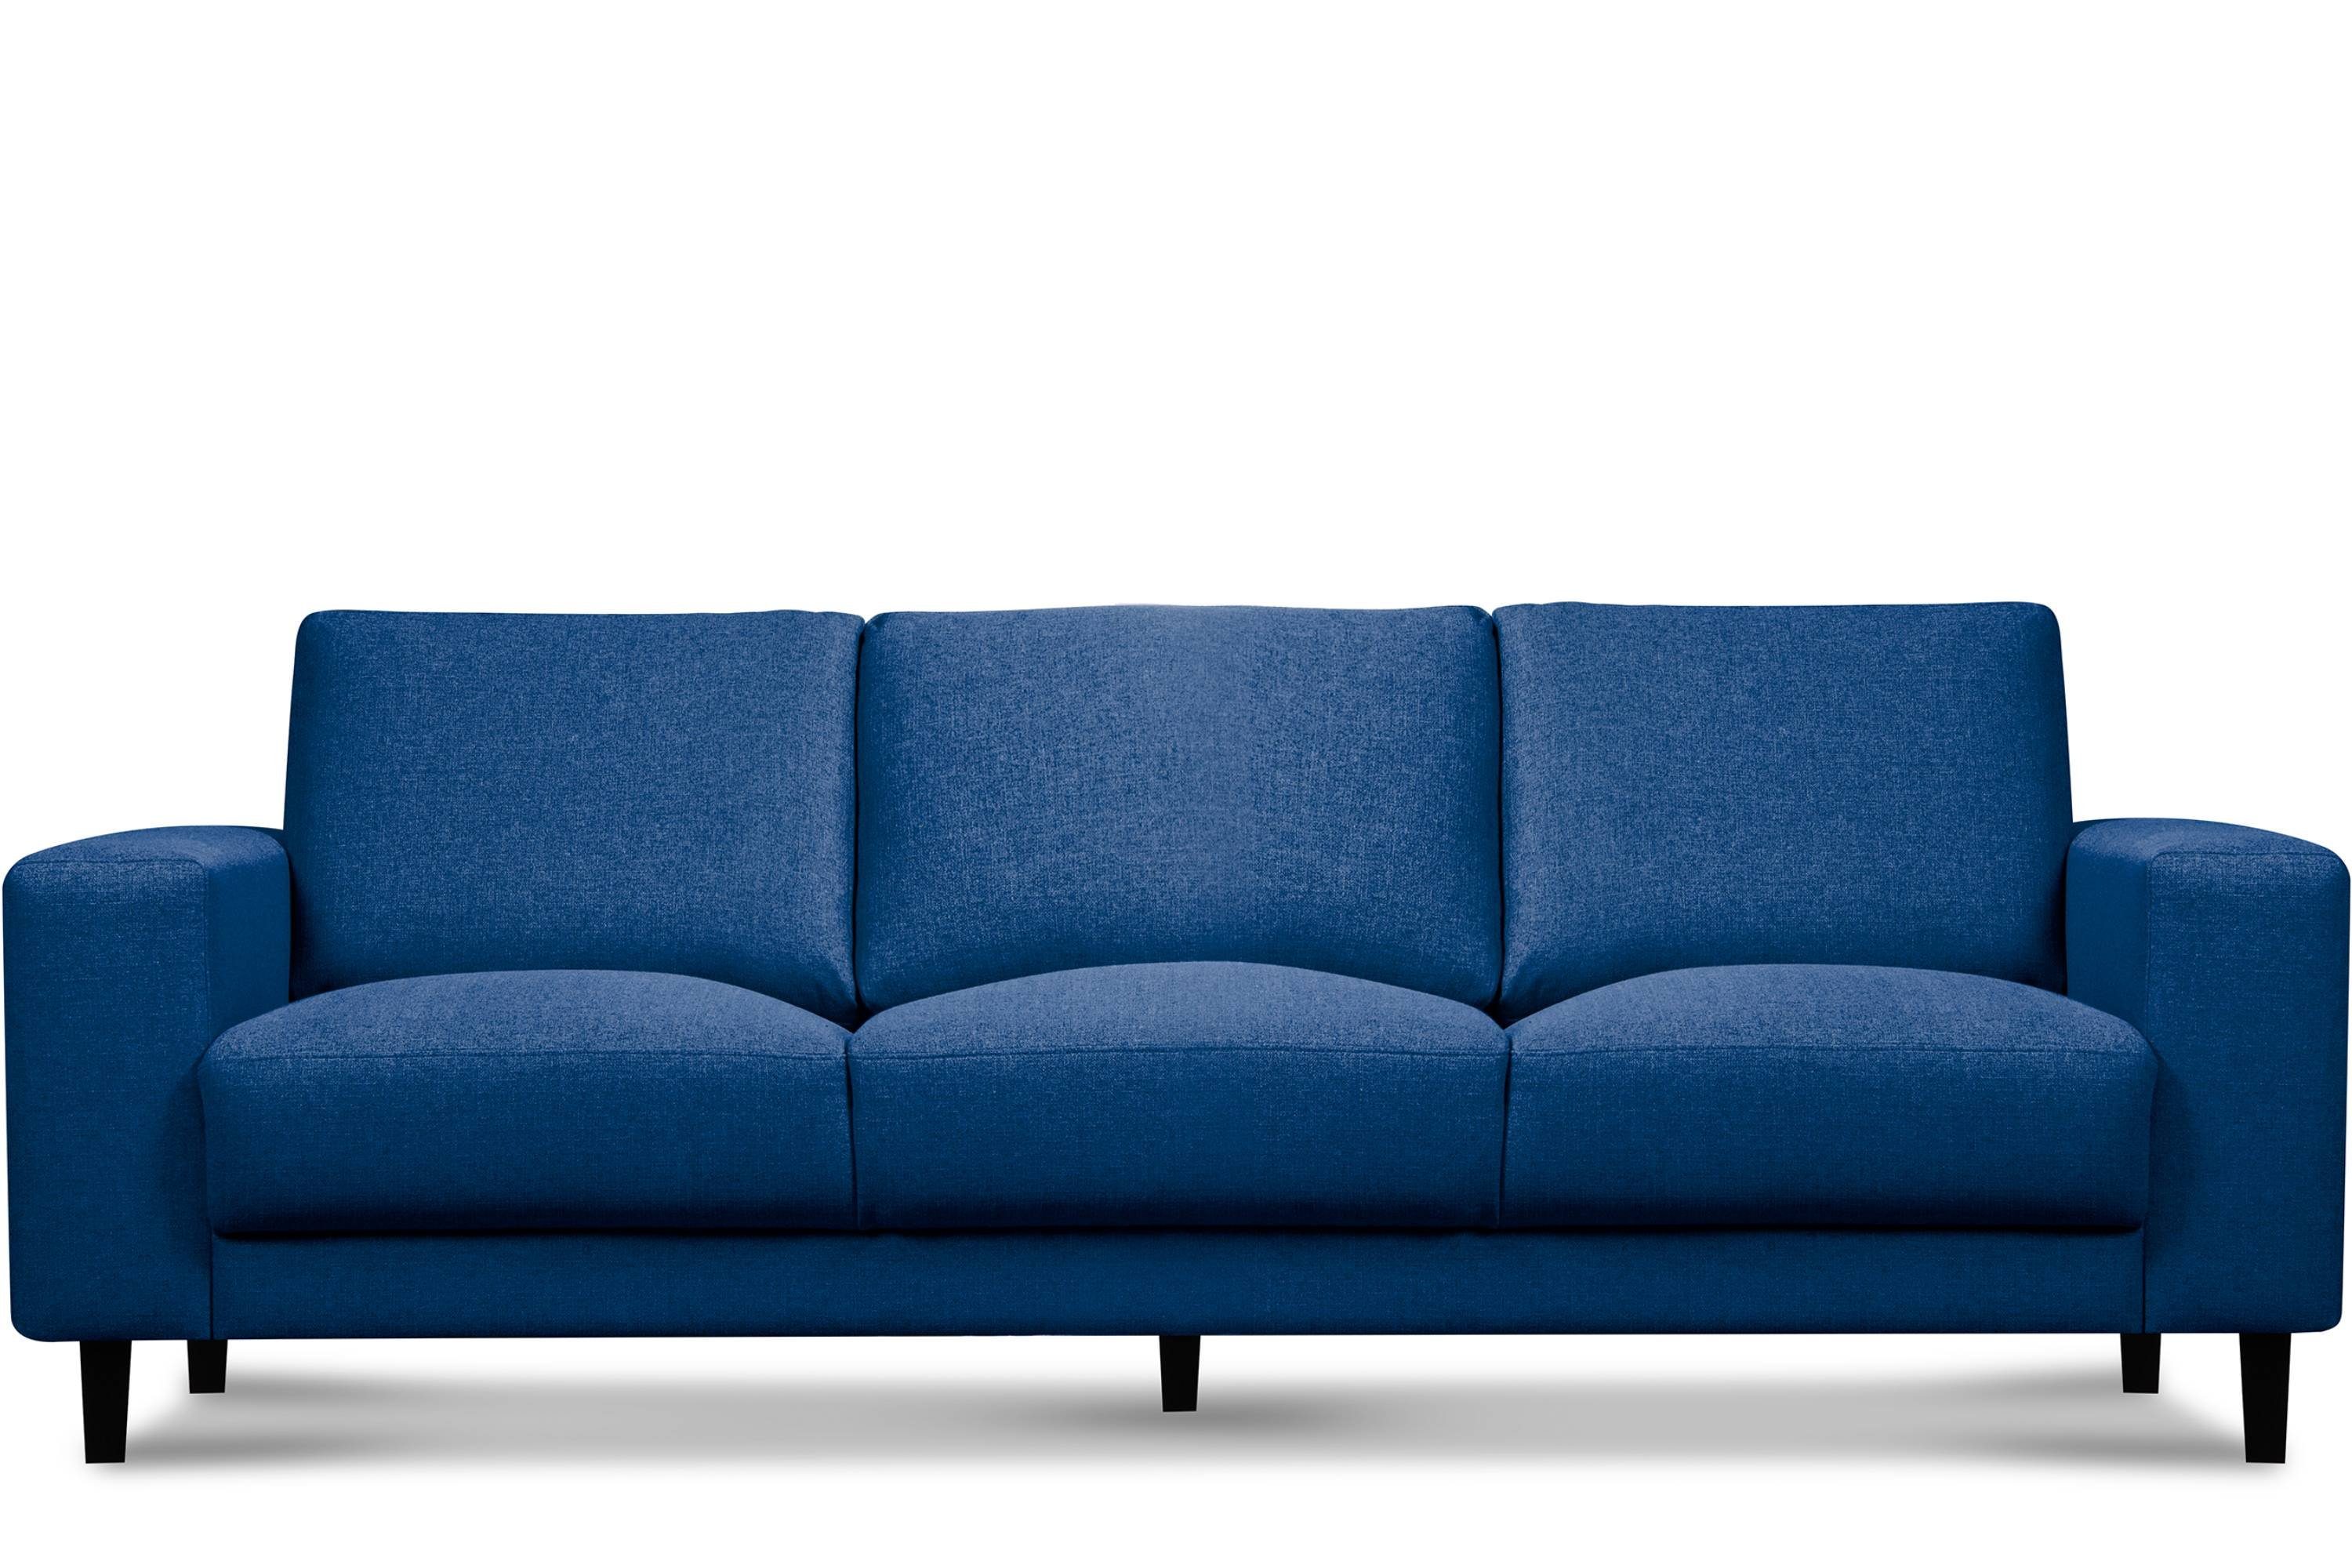 Massivholzbeine, Design blau blau zeitloses 3-Sitzer Konsimo blau | Personen, Sofa ALIO 3 |